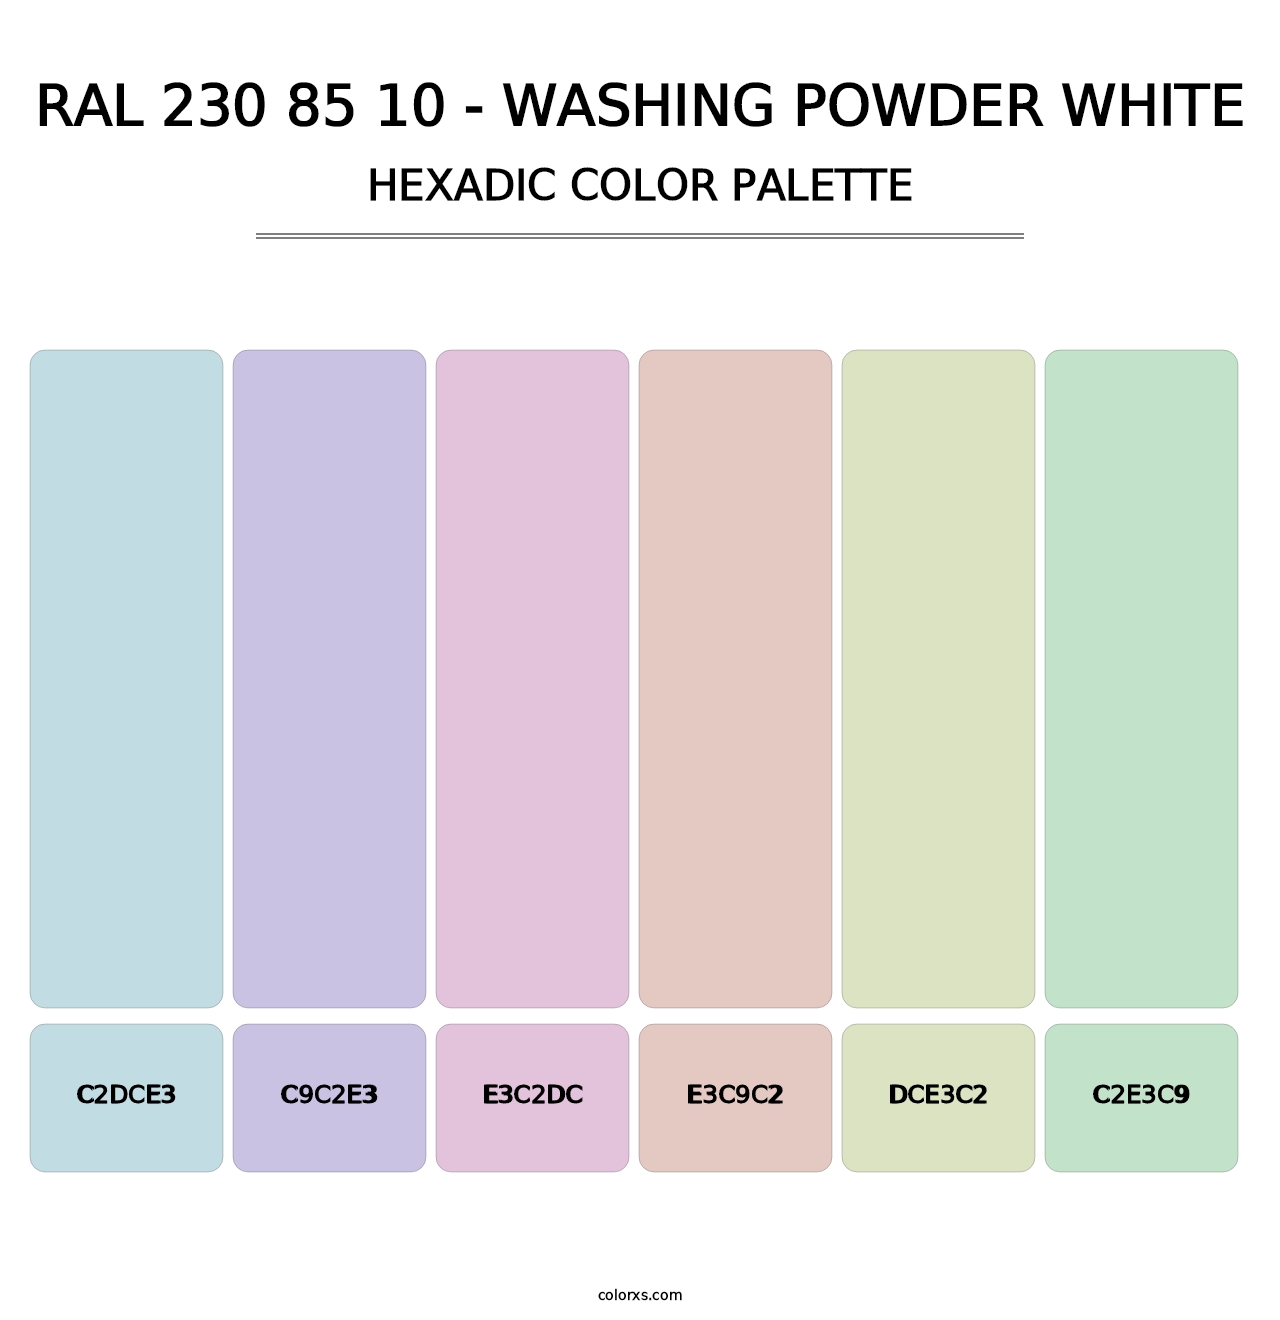 RAL 230 85 10 - Washing Powder White - Hexadic Color Palette